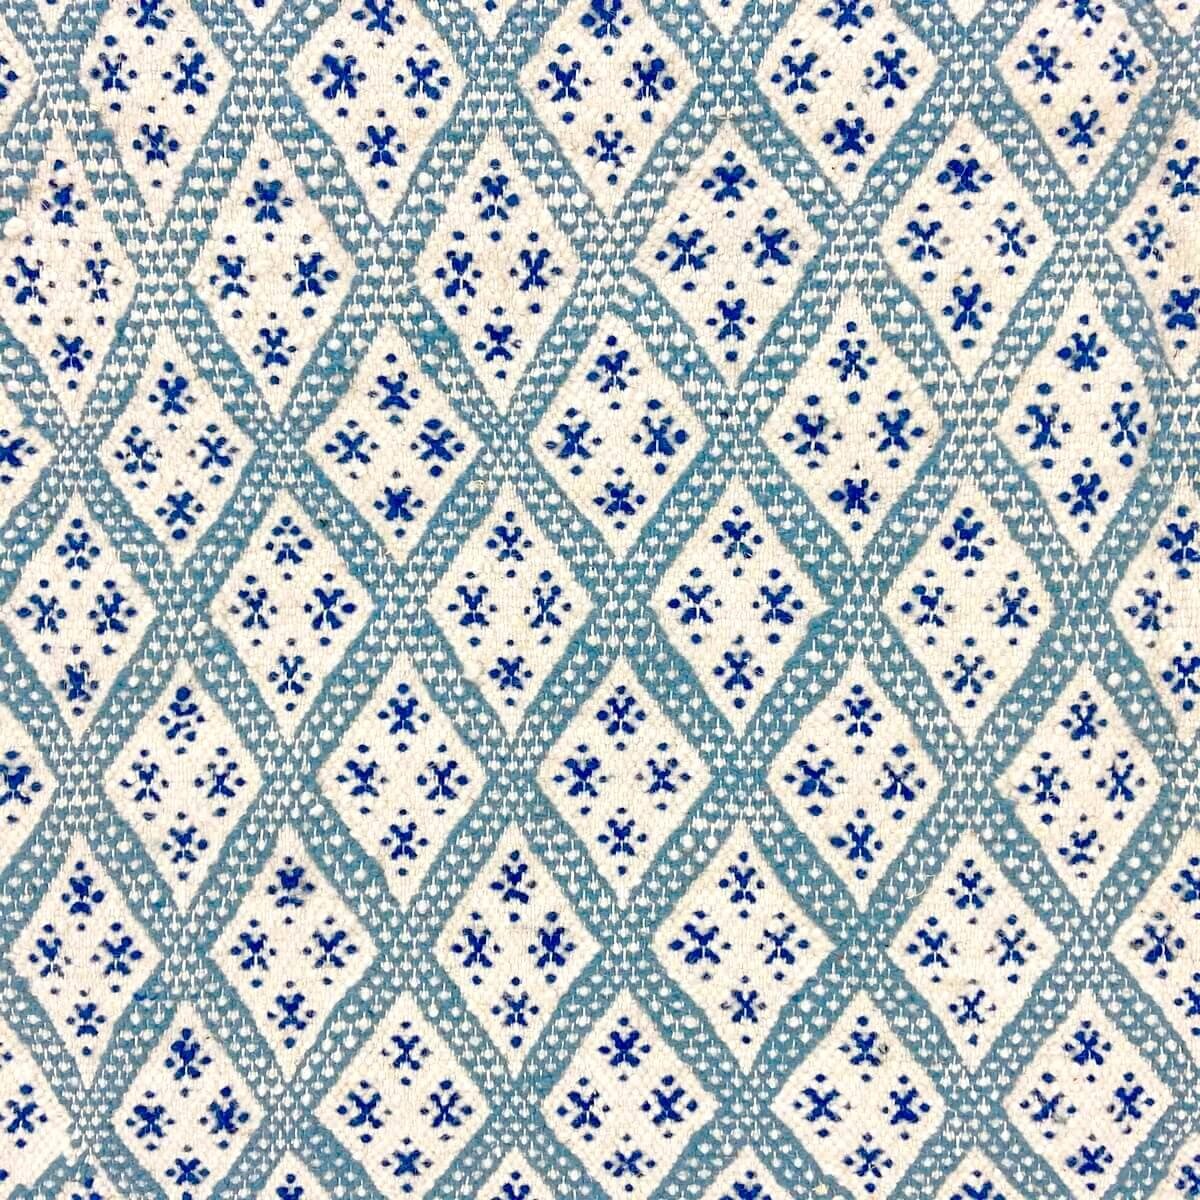 Tapis berbère Tapis Margoum Ibarkou 155x250 Bleu/Blanc (Fait main, Laine, Tunisie) Tapis margoum tunisien de la ville de Kairoua